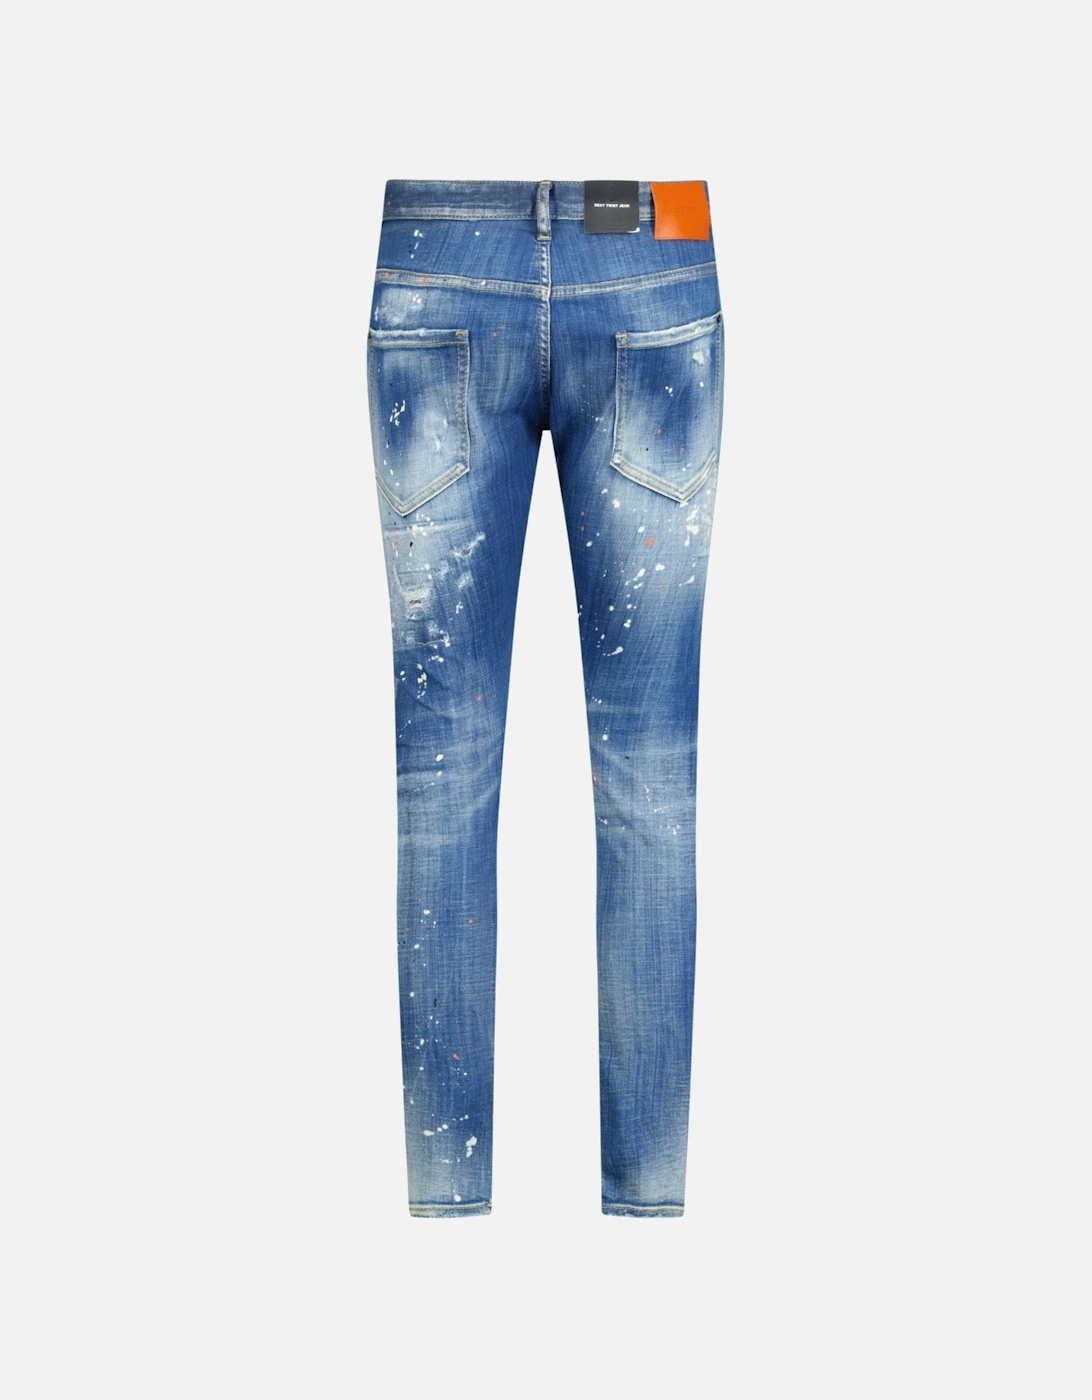 'Sexy Twist Jean' 'I Love' Paint Splatter Jeans Blue